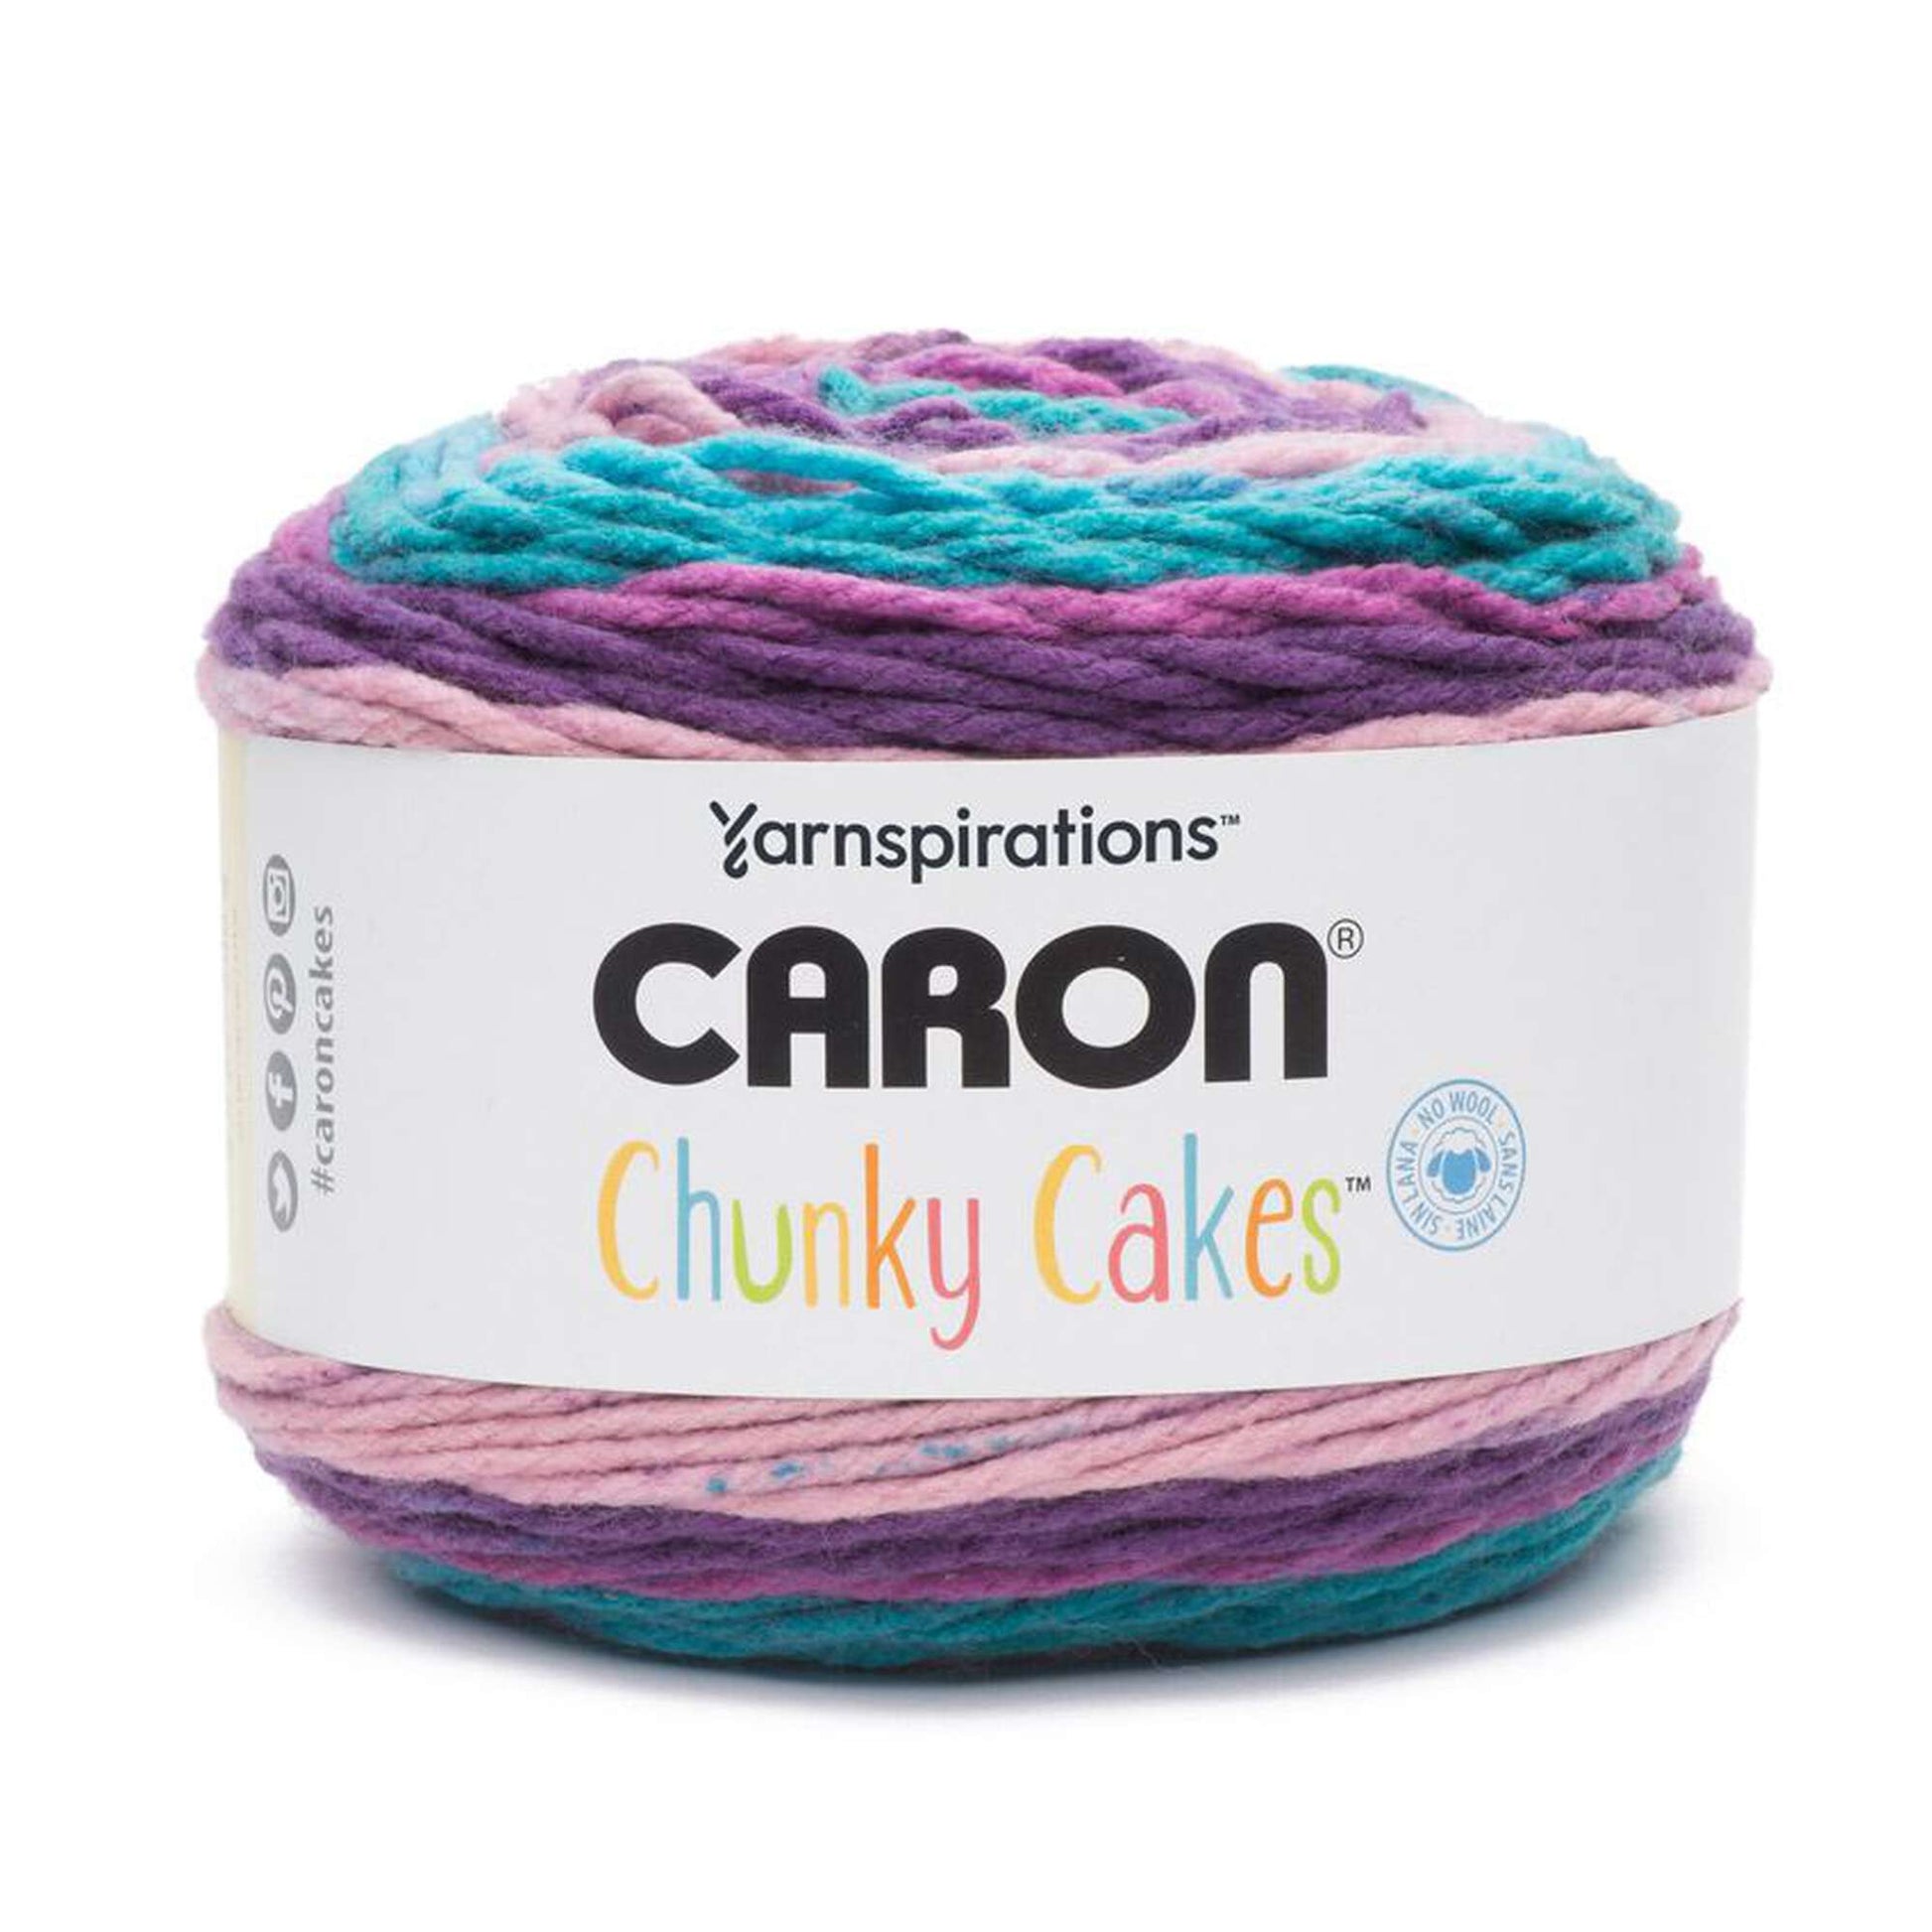 Caron Chunky Cakes Yarn, Yarnspirations